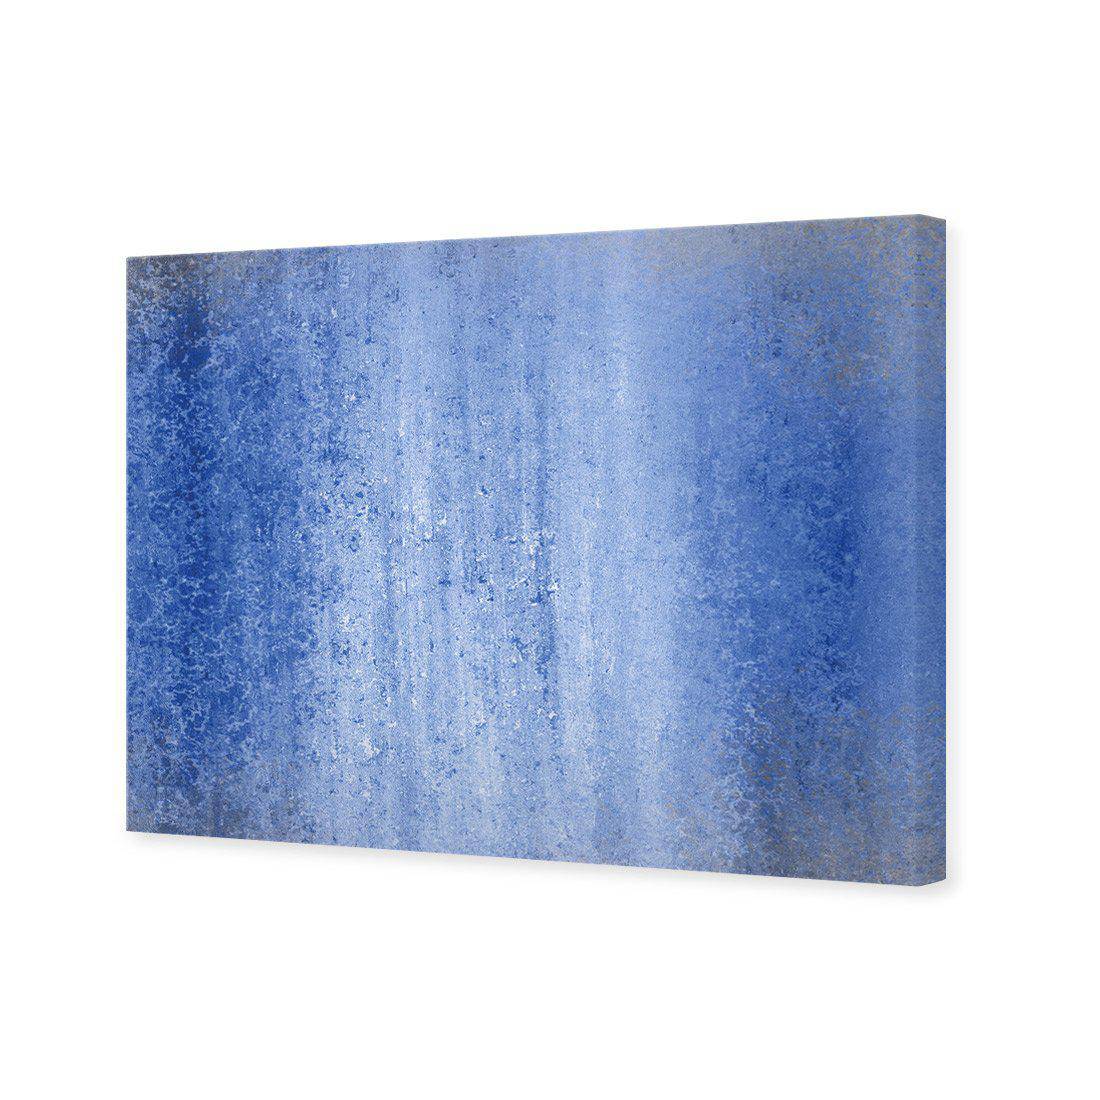 From Darkness Into Light, Blue Canvas Art-Canvas-Wall Art Designs-45x30cm-Canvas - No Frame-Wall Art Designs